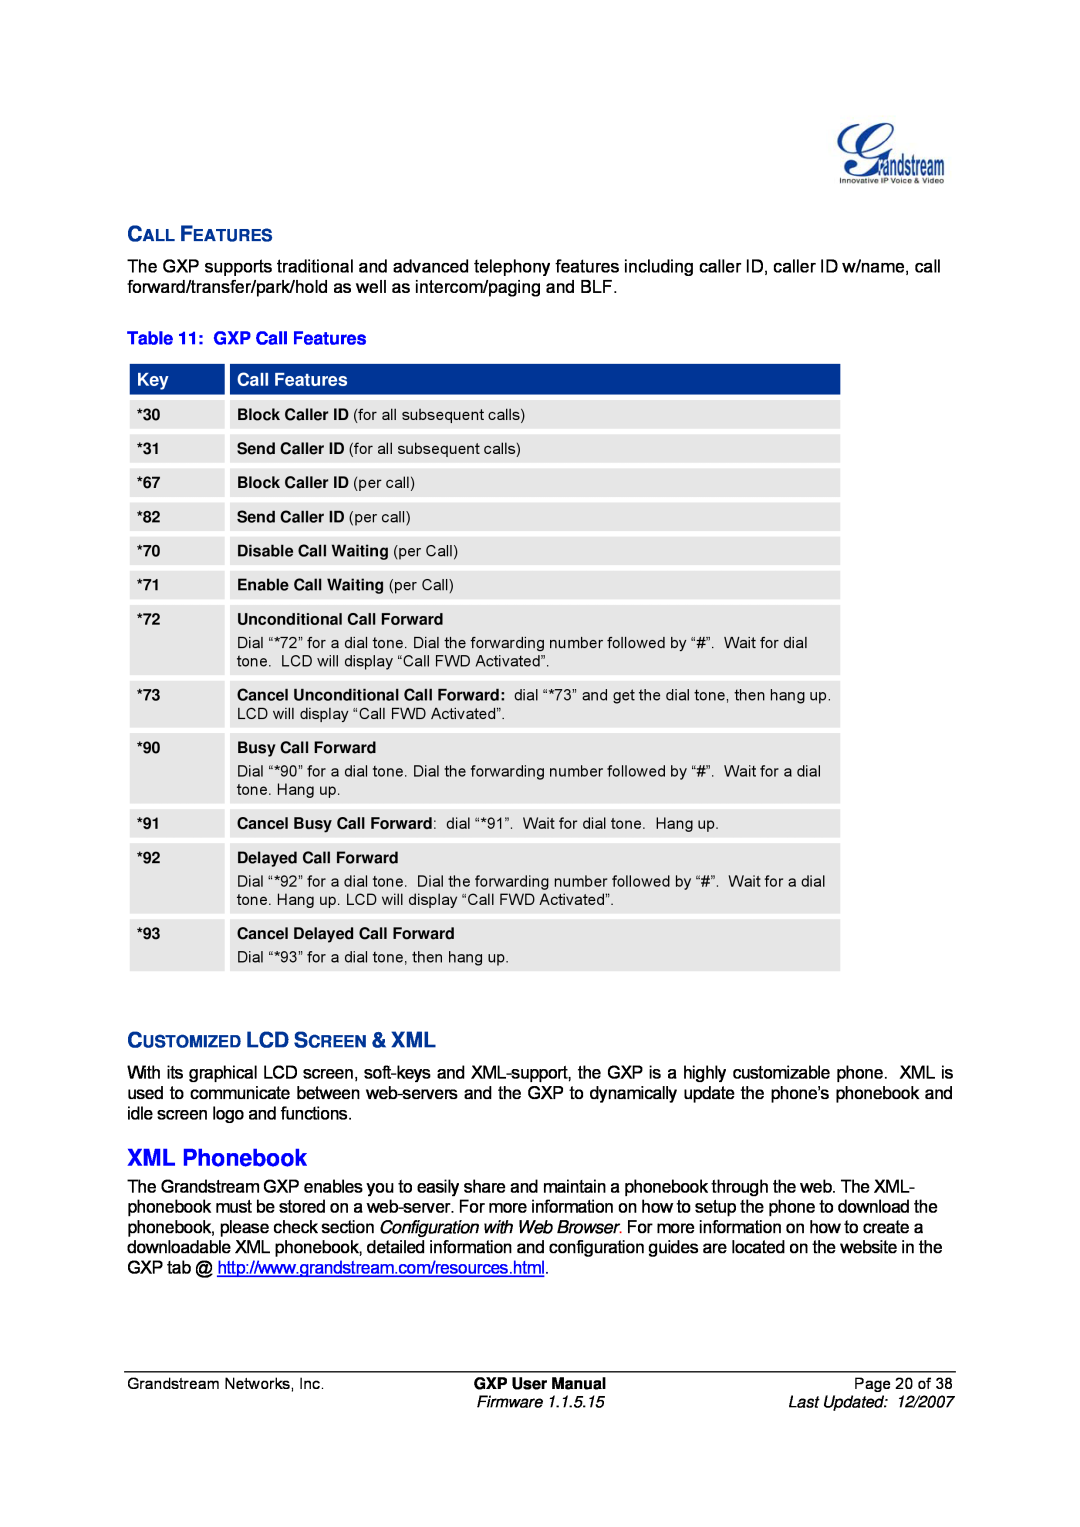 Grandstream Networks GXP-2010, GXP-1200 manual XML Phonebook, GXP Call Features 